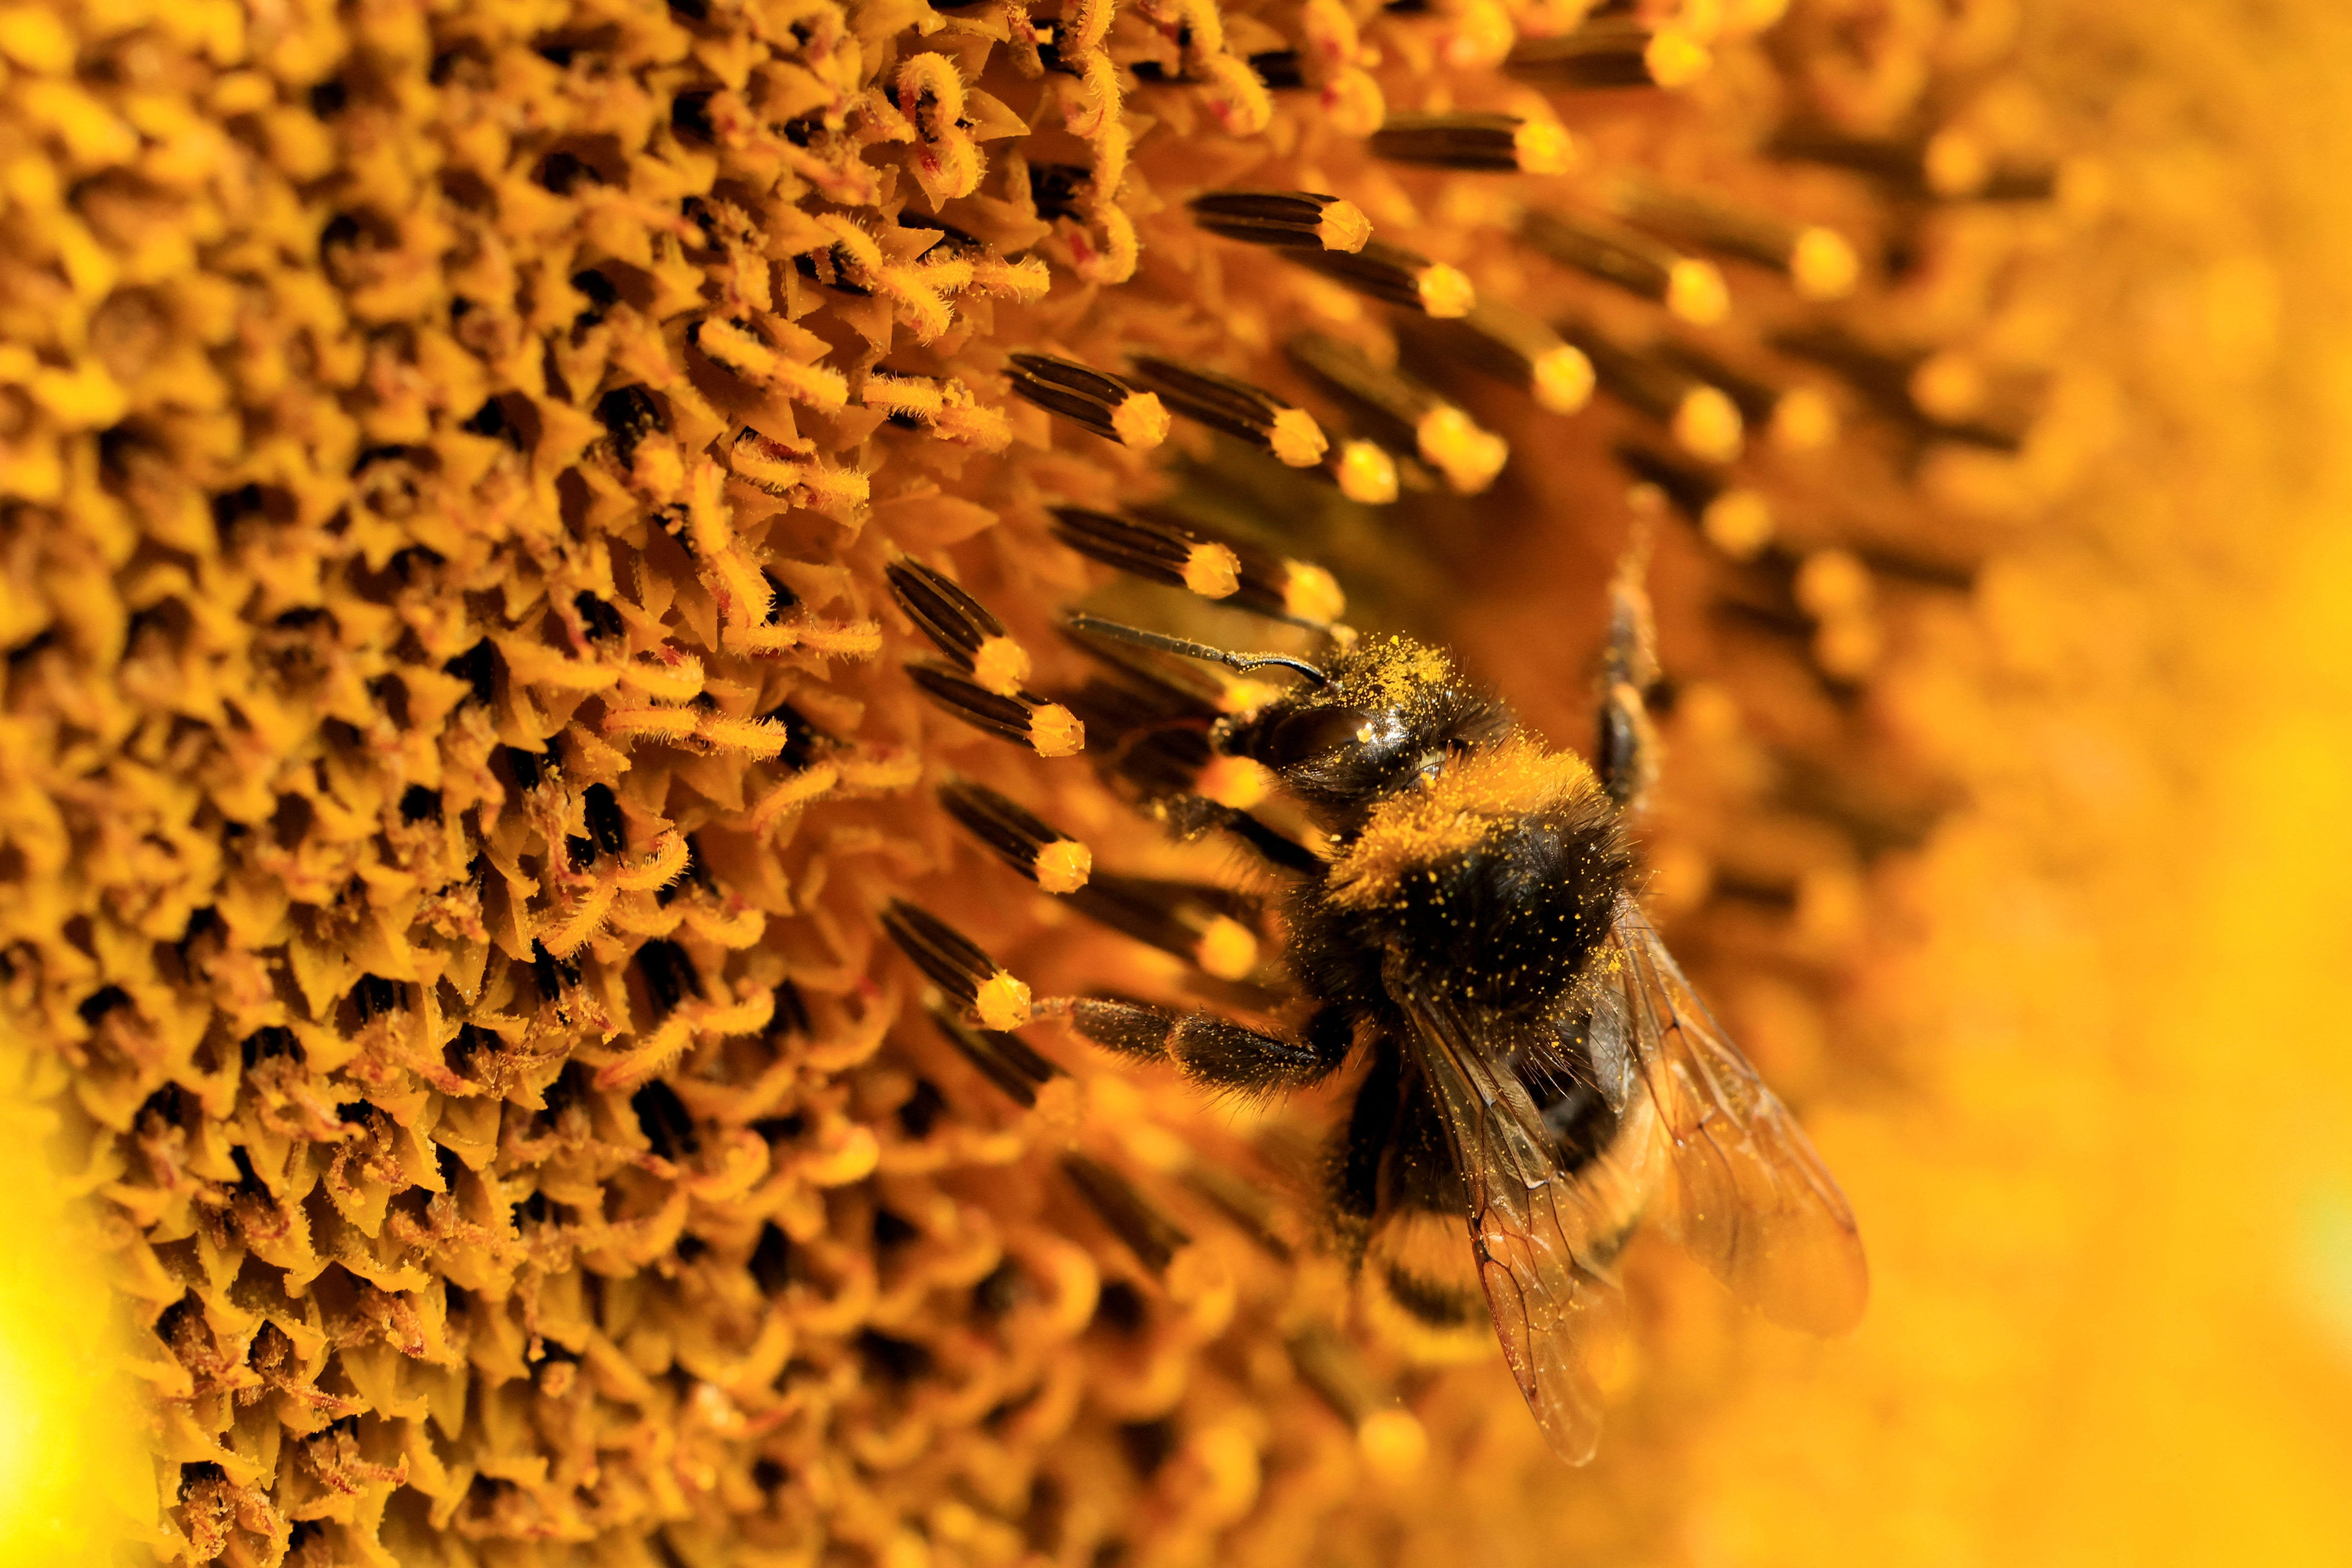 A bumblebee feeds on a sunflower